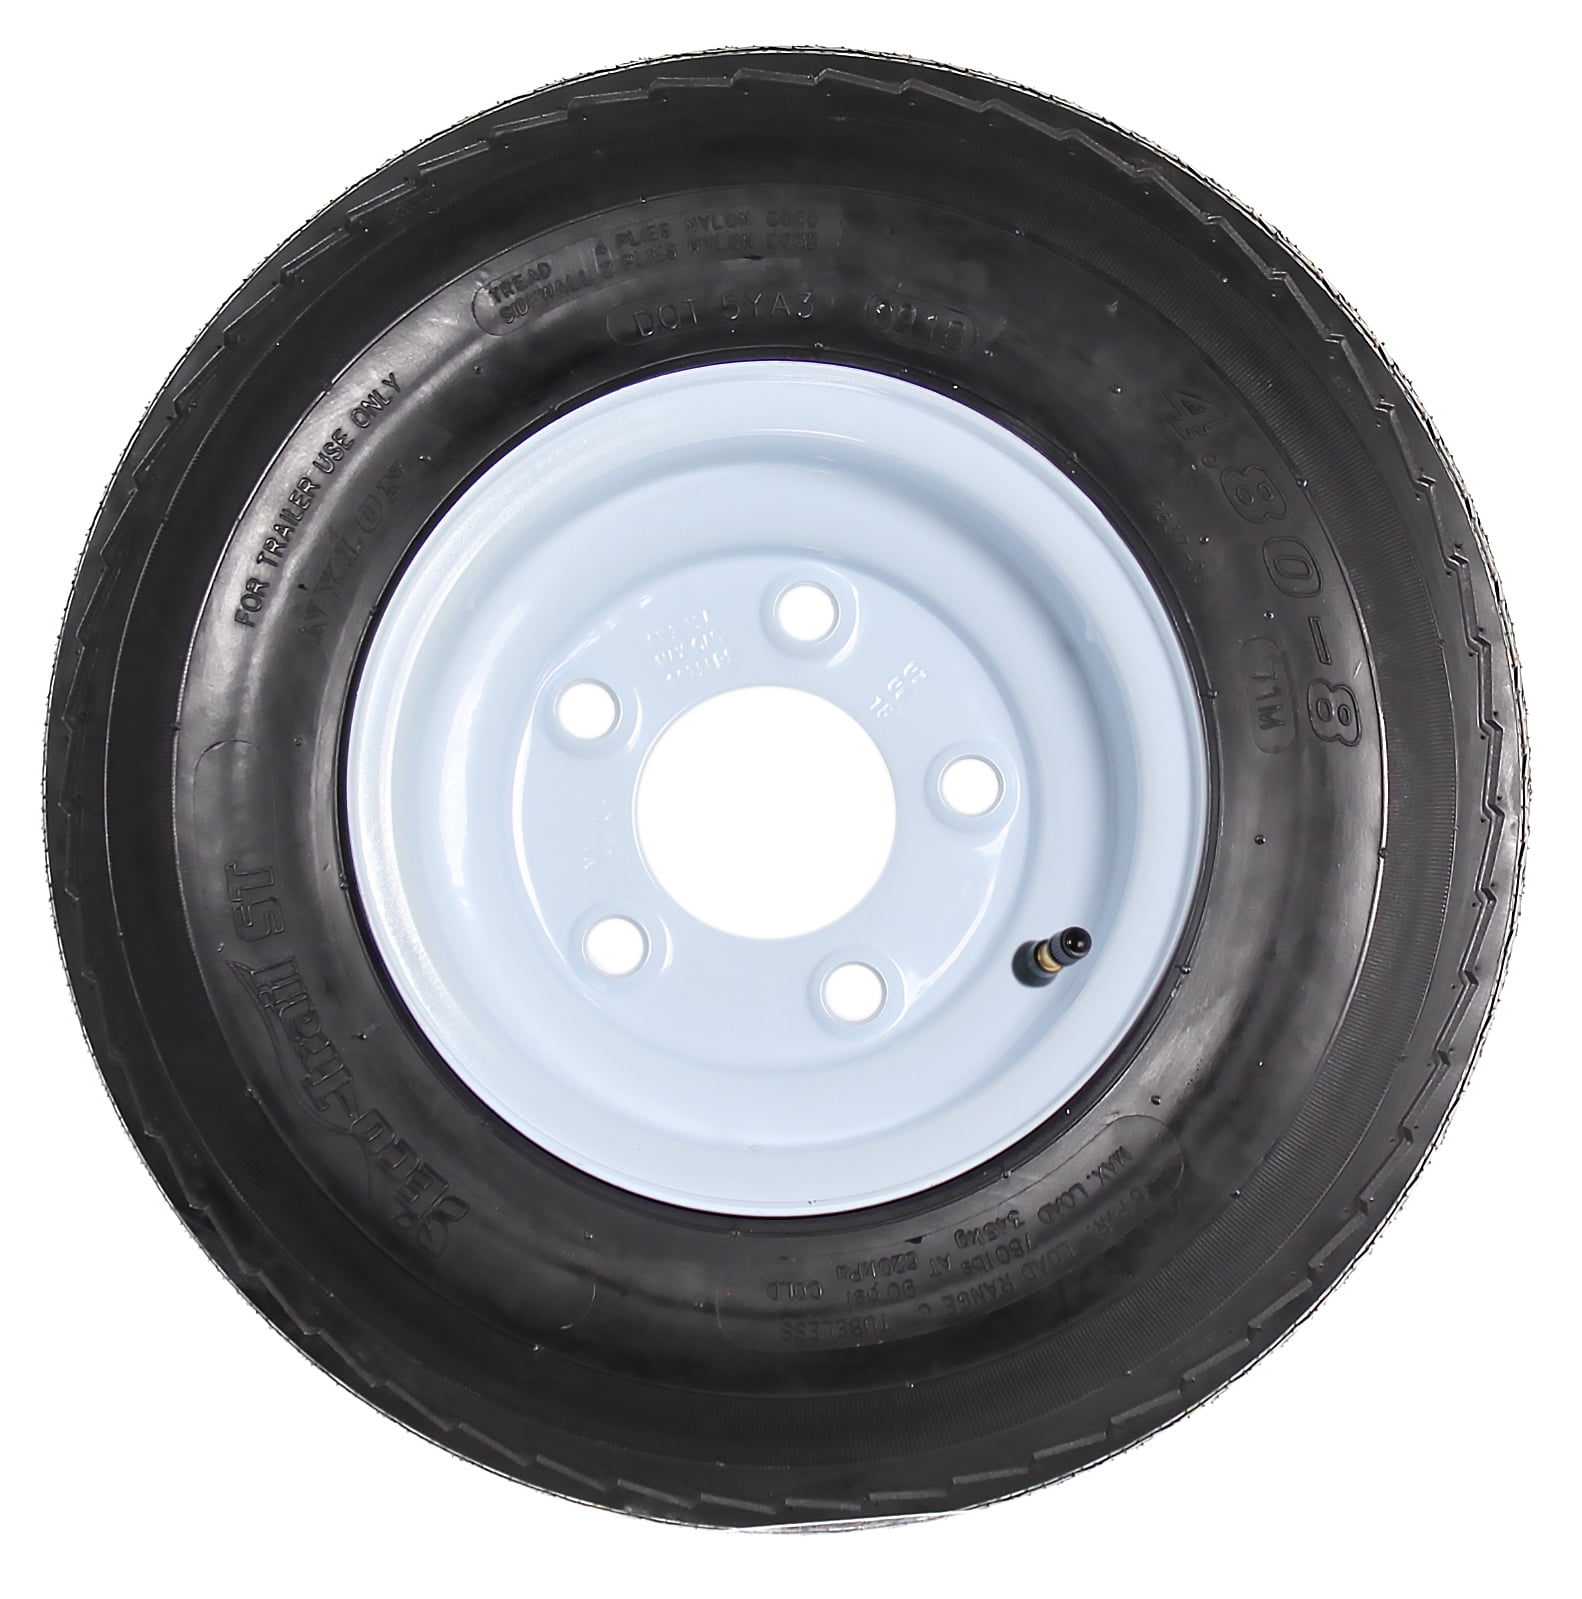 2 Two Trailer Tires On Rims 4.80-8 480-8 LRC 5 Lug Bolt Wheel White 6PLY 